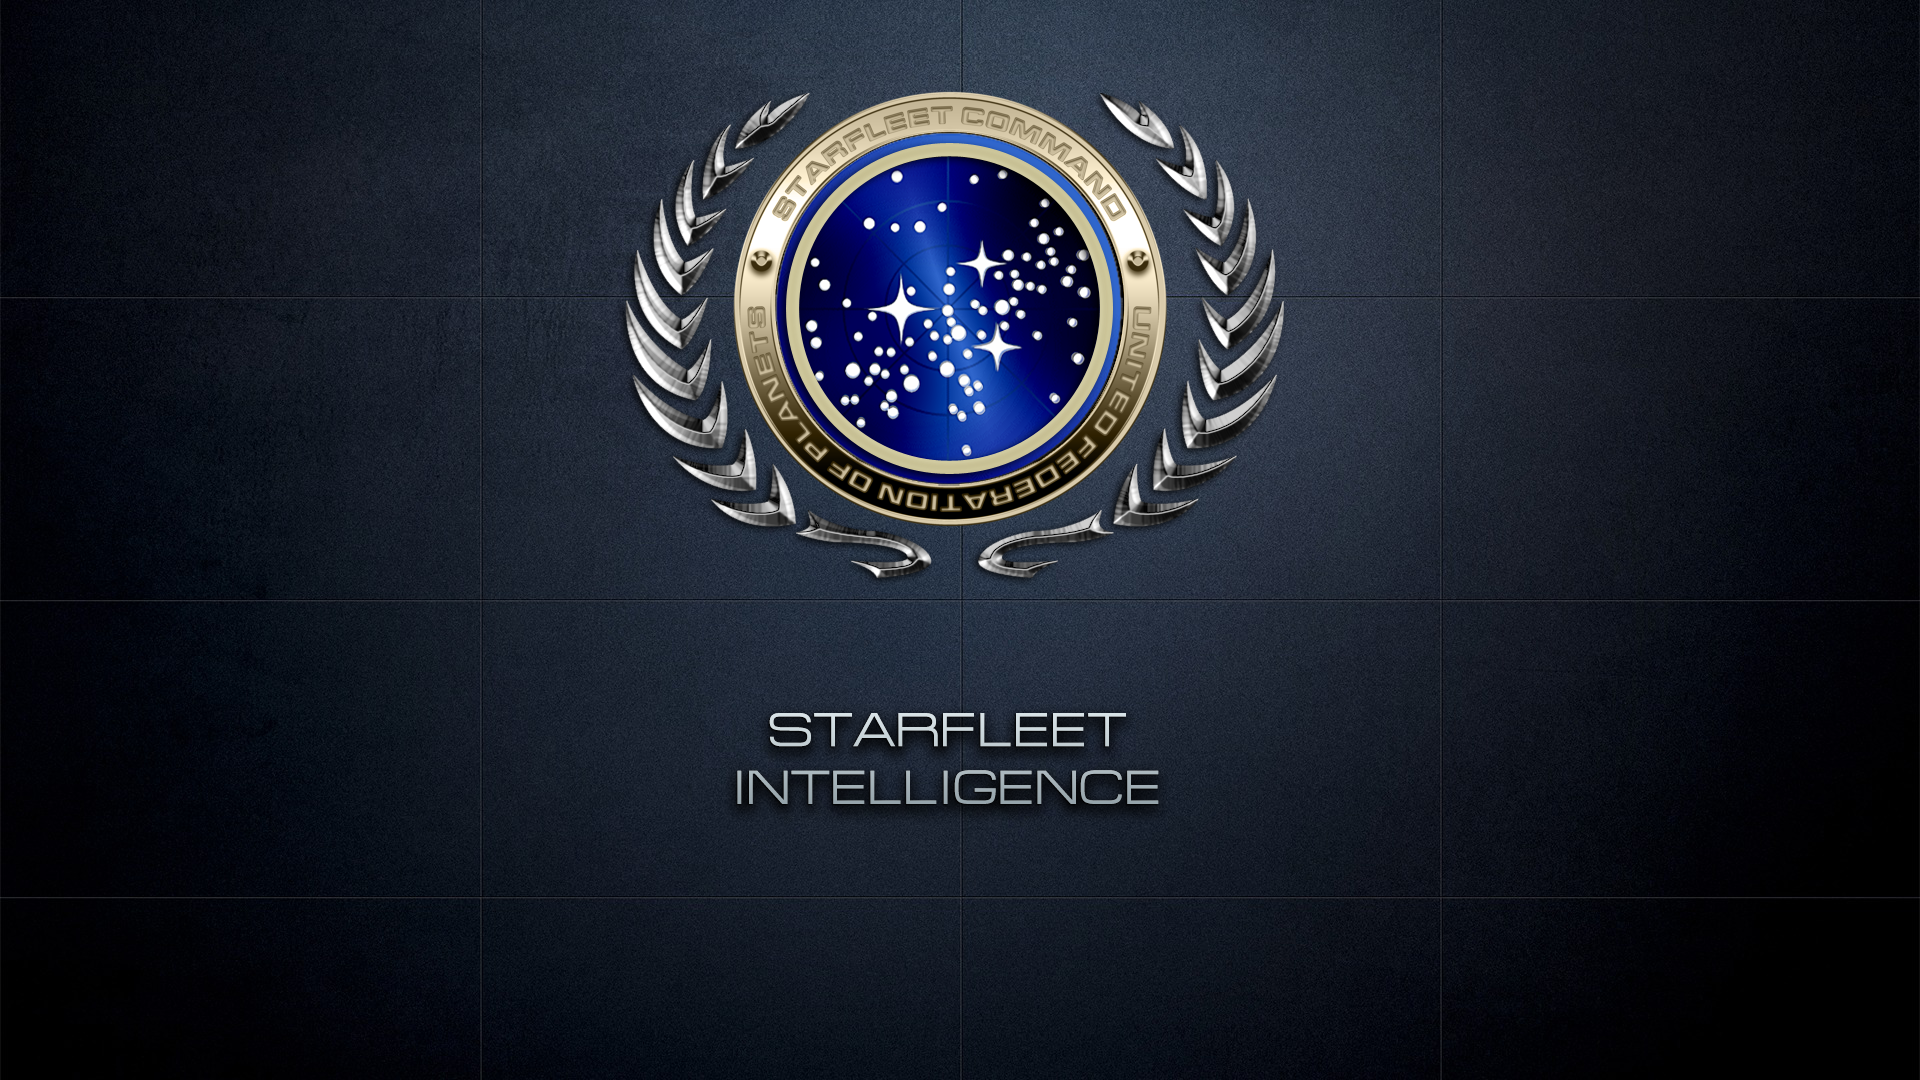 Starfleet Intelligence Insignia Of The United Federation